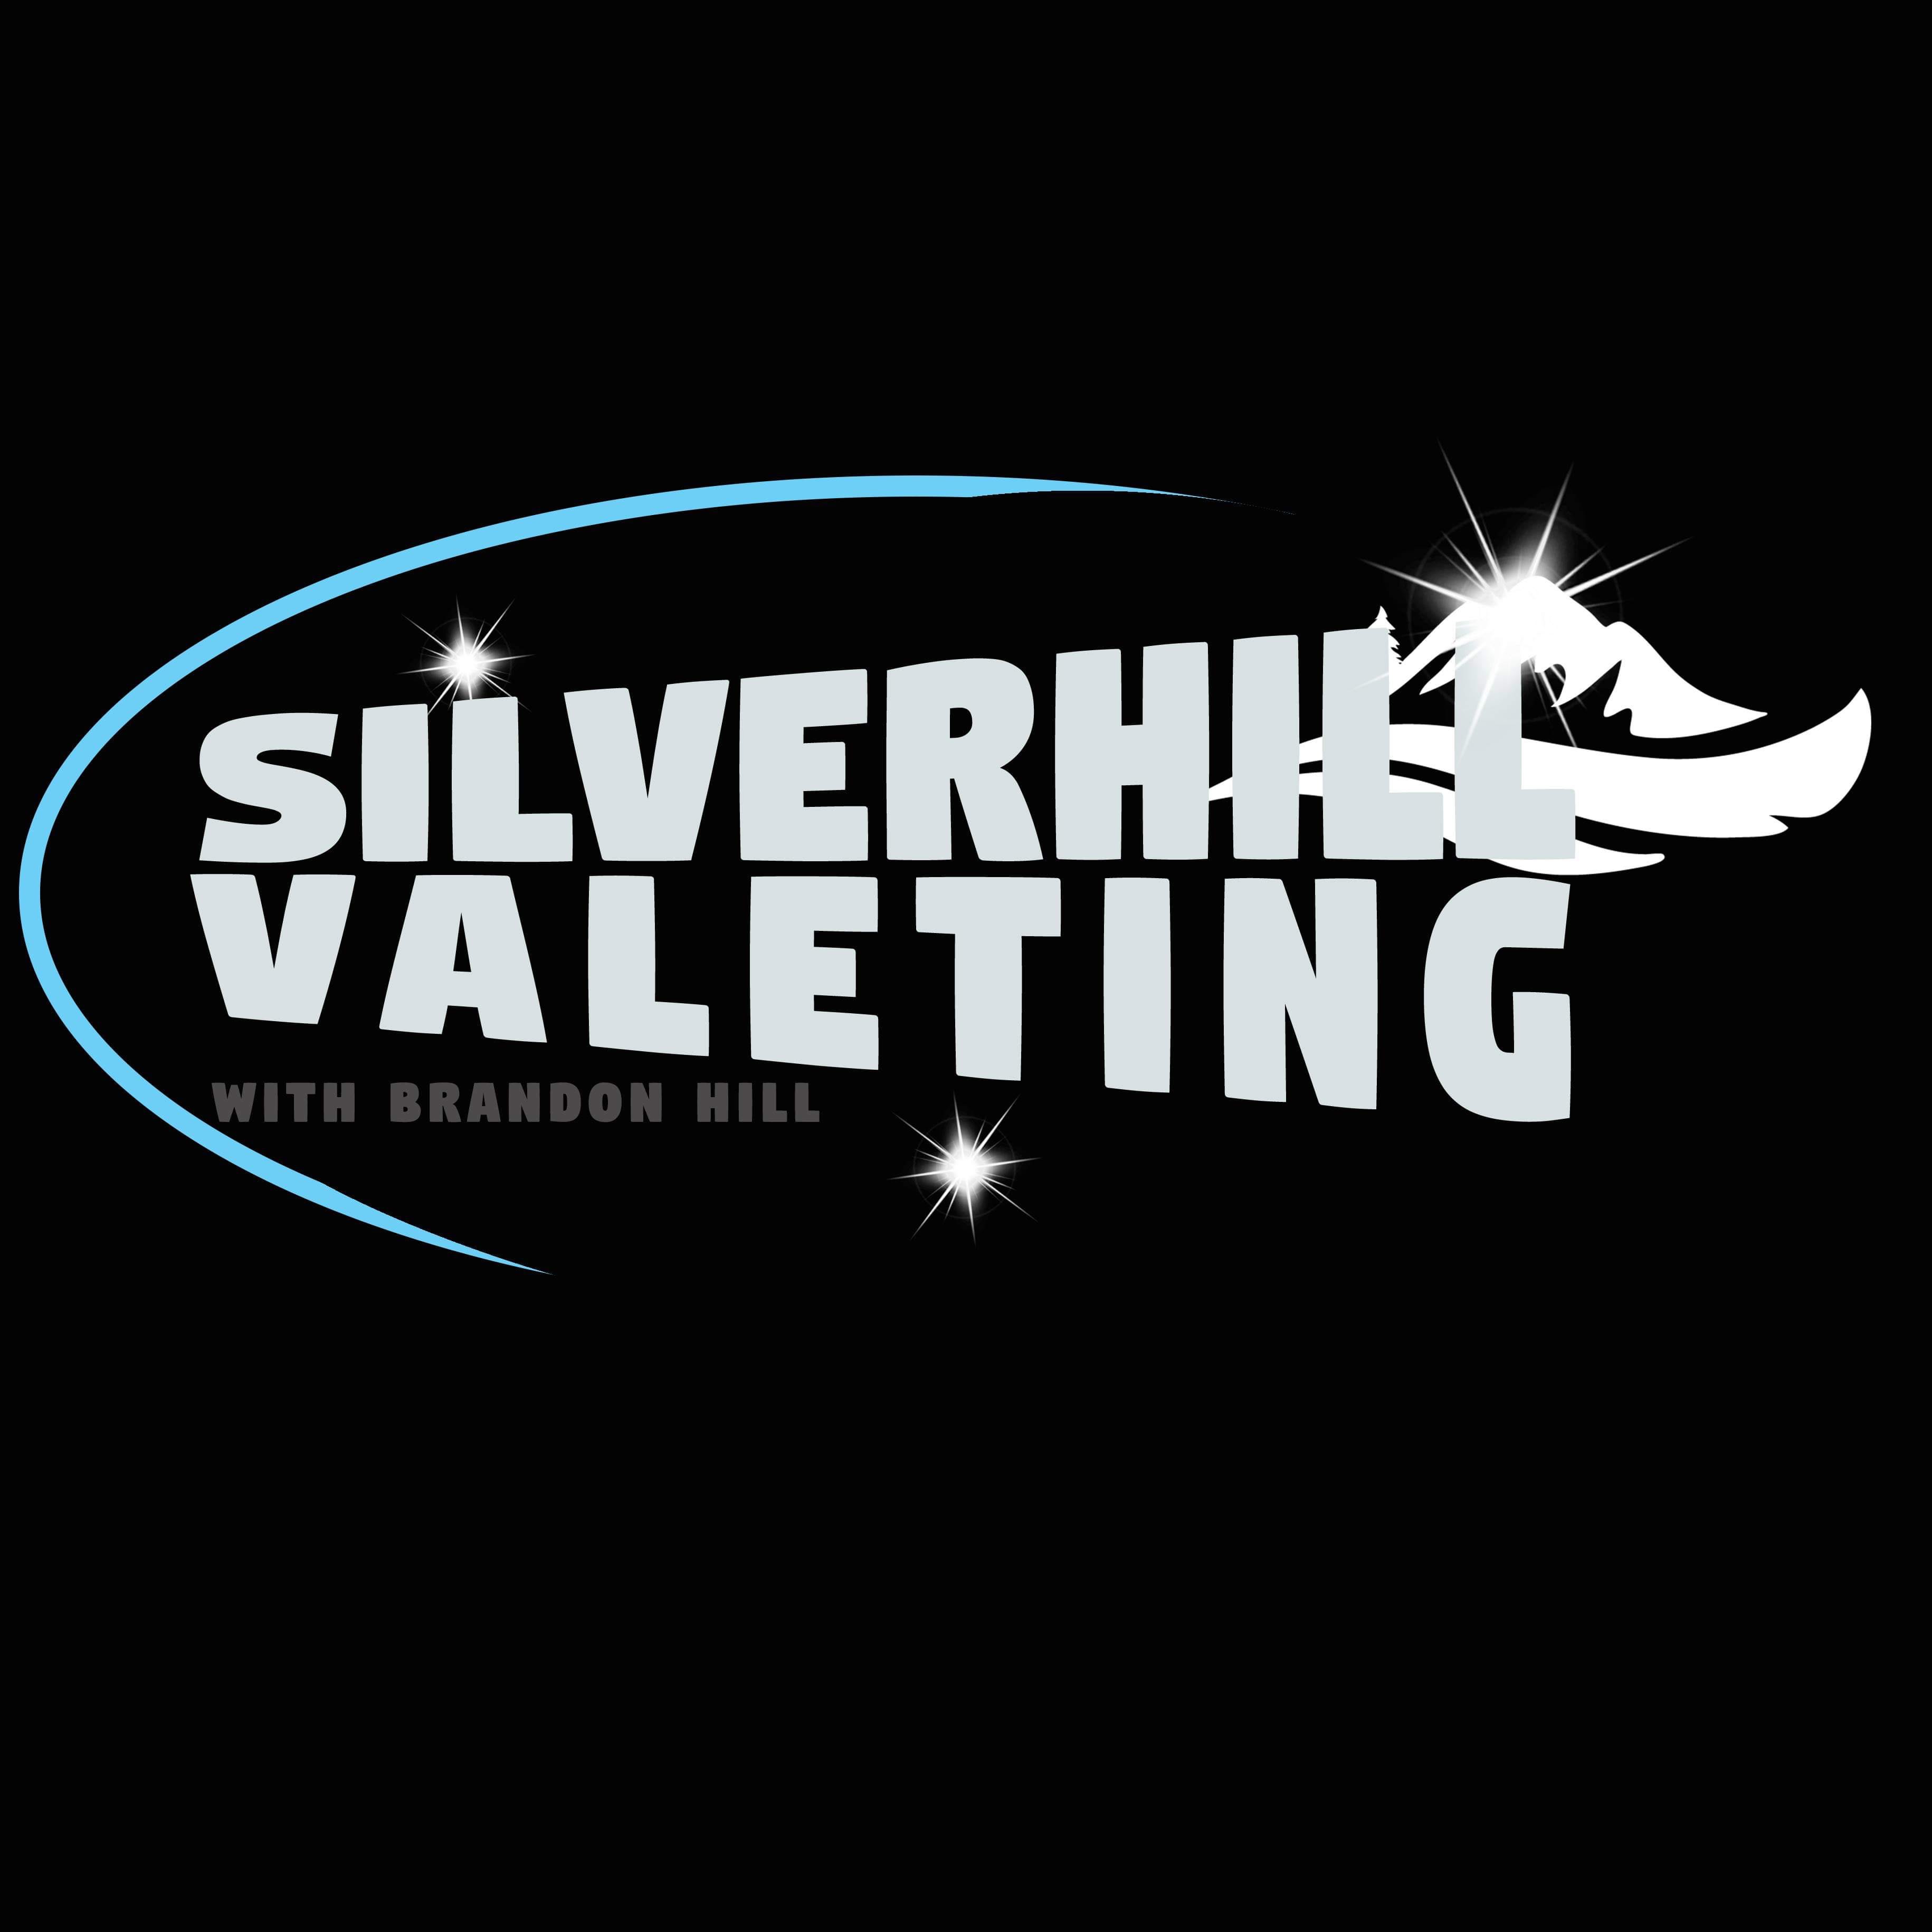 Silverhill Valeting